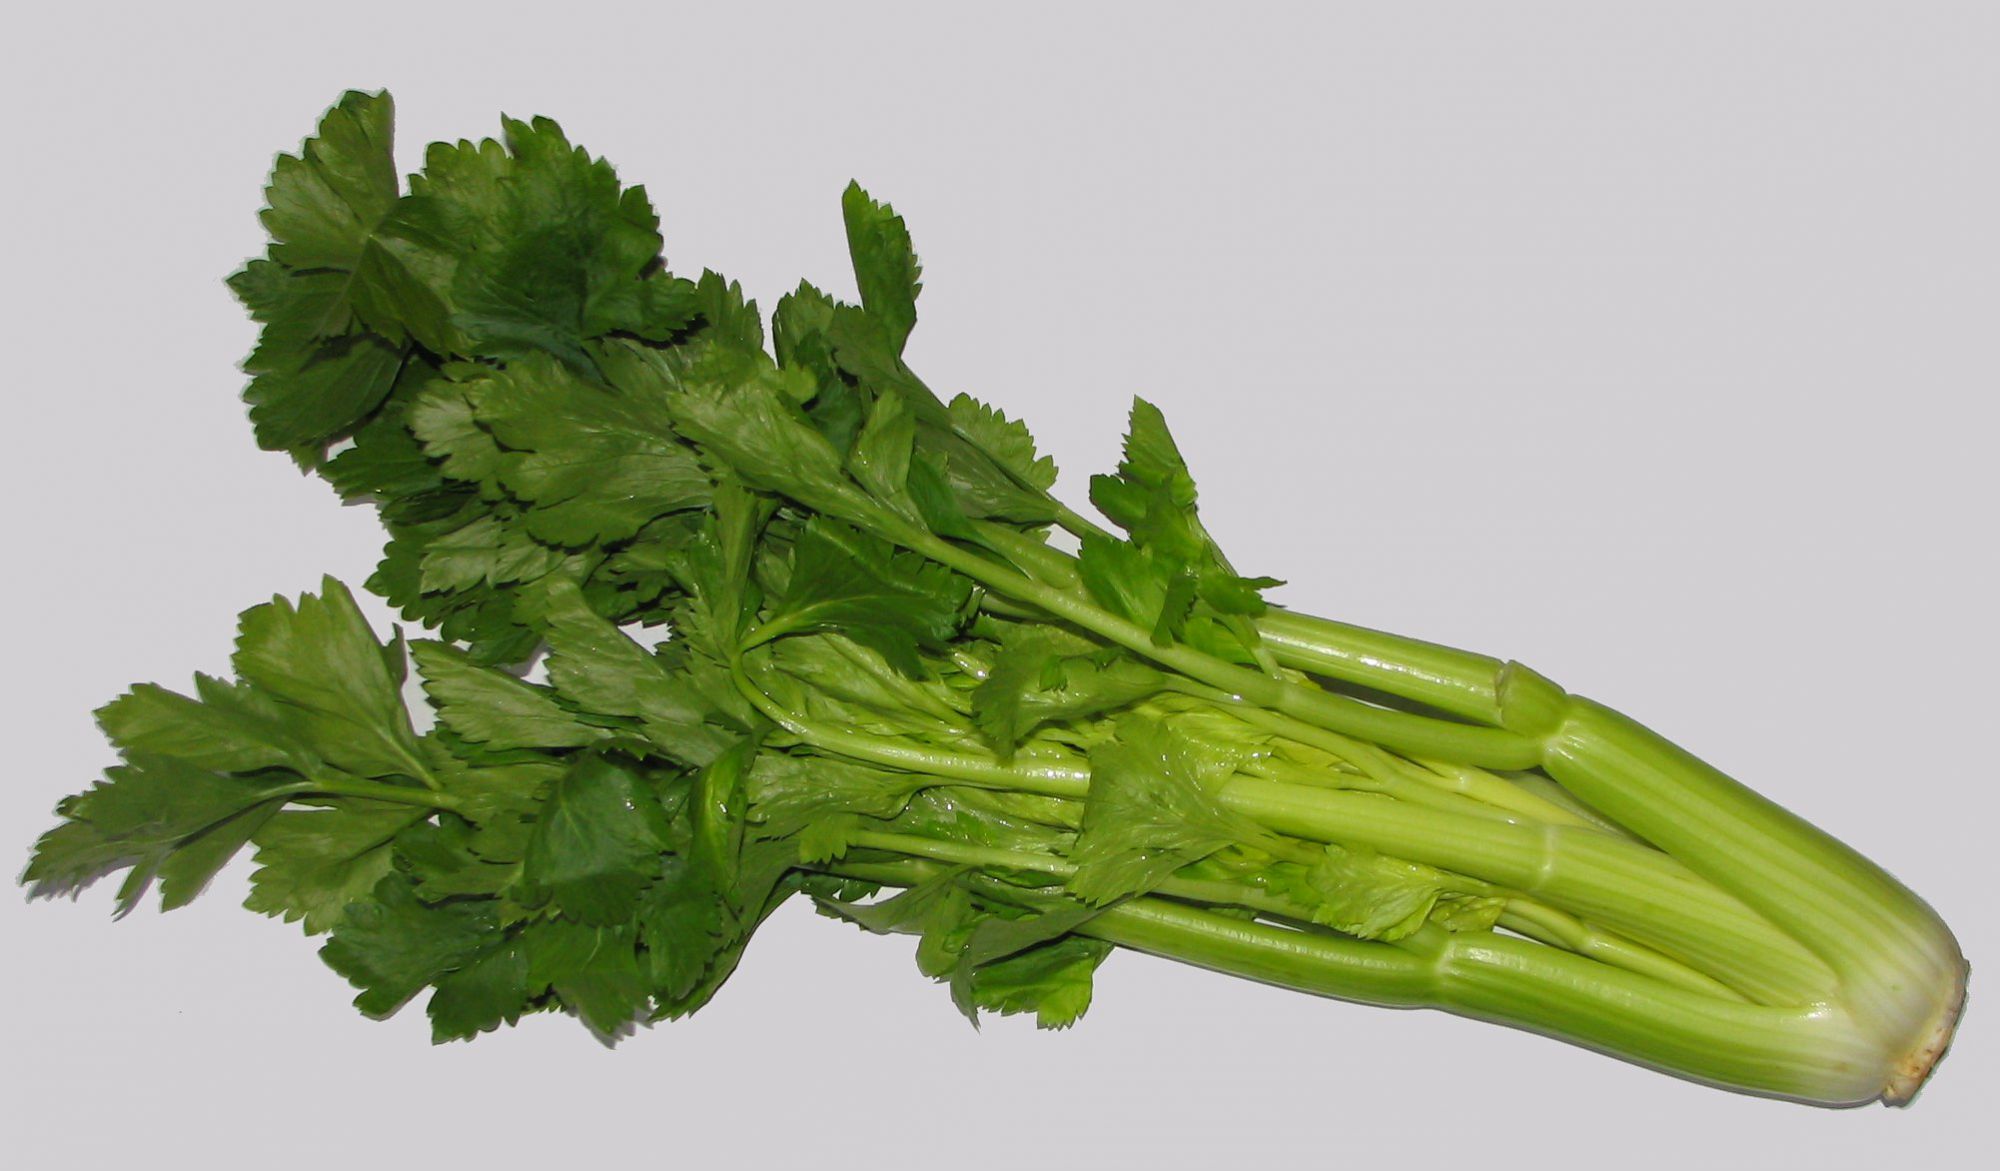 Celery stalks are eaten. © Wikimedia Commons